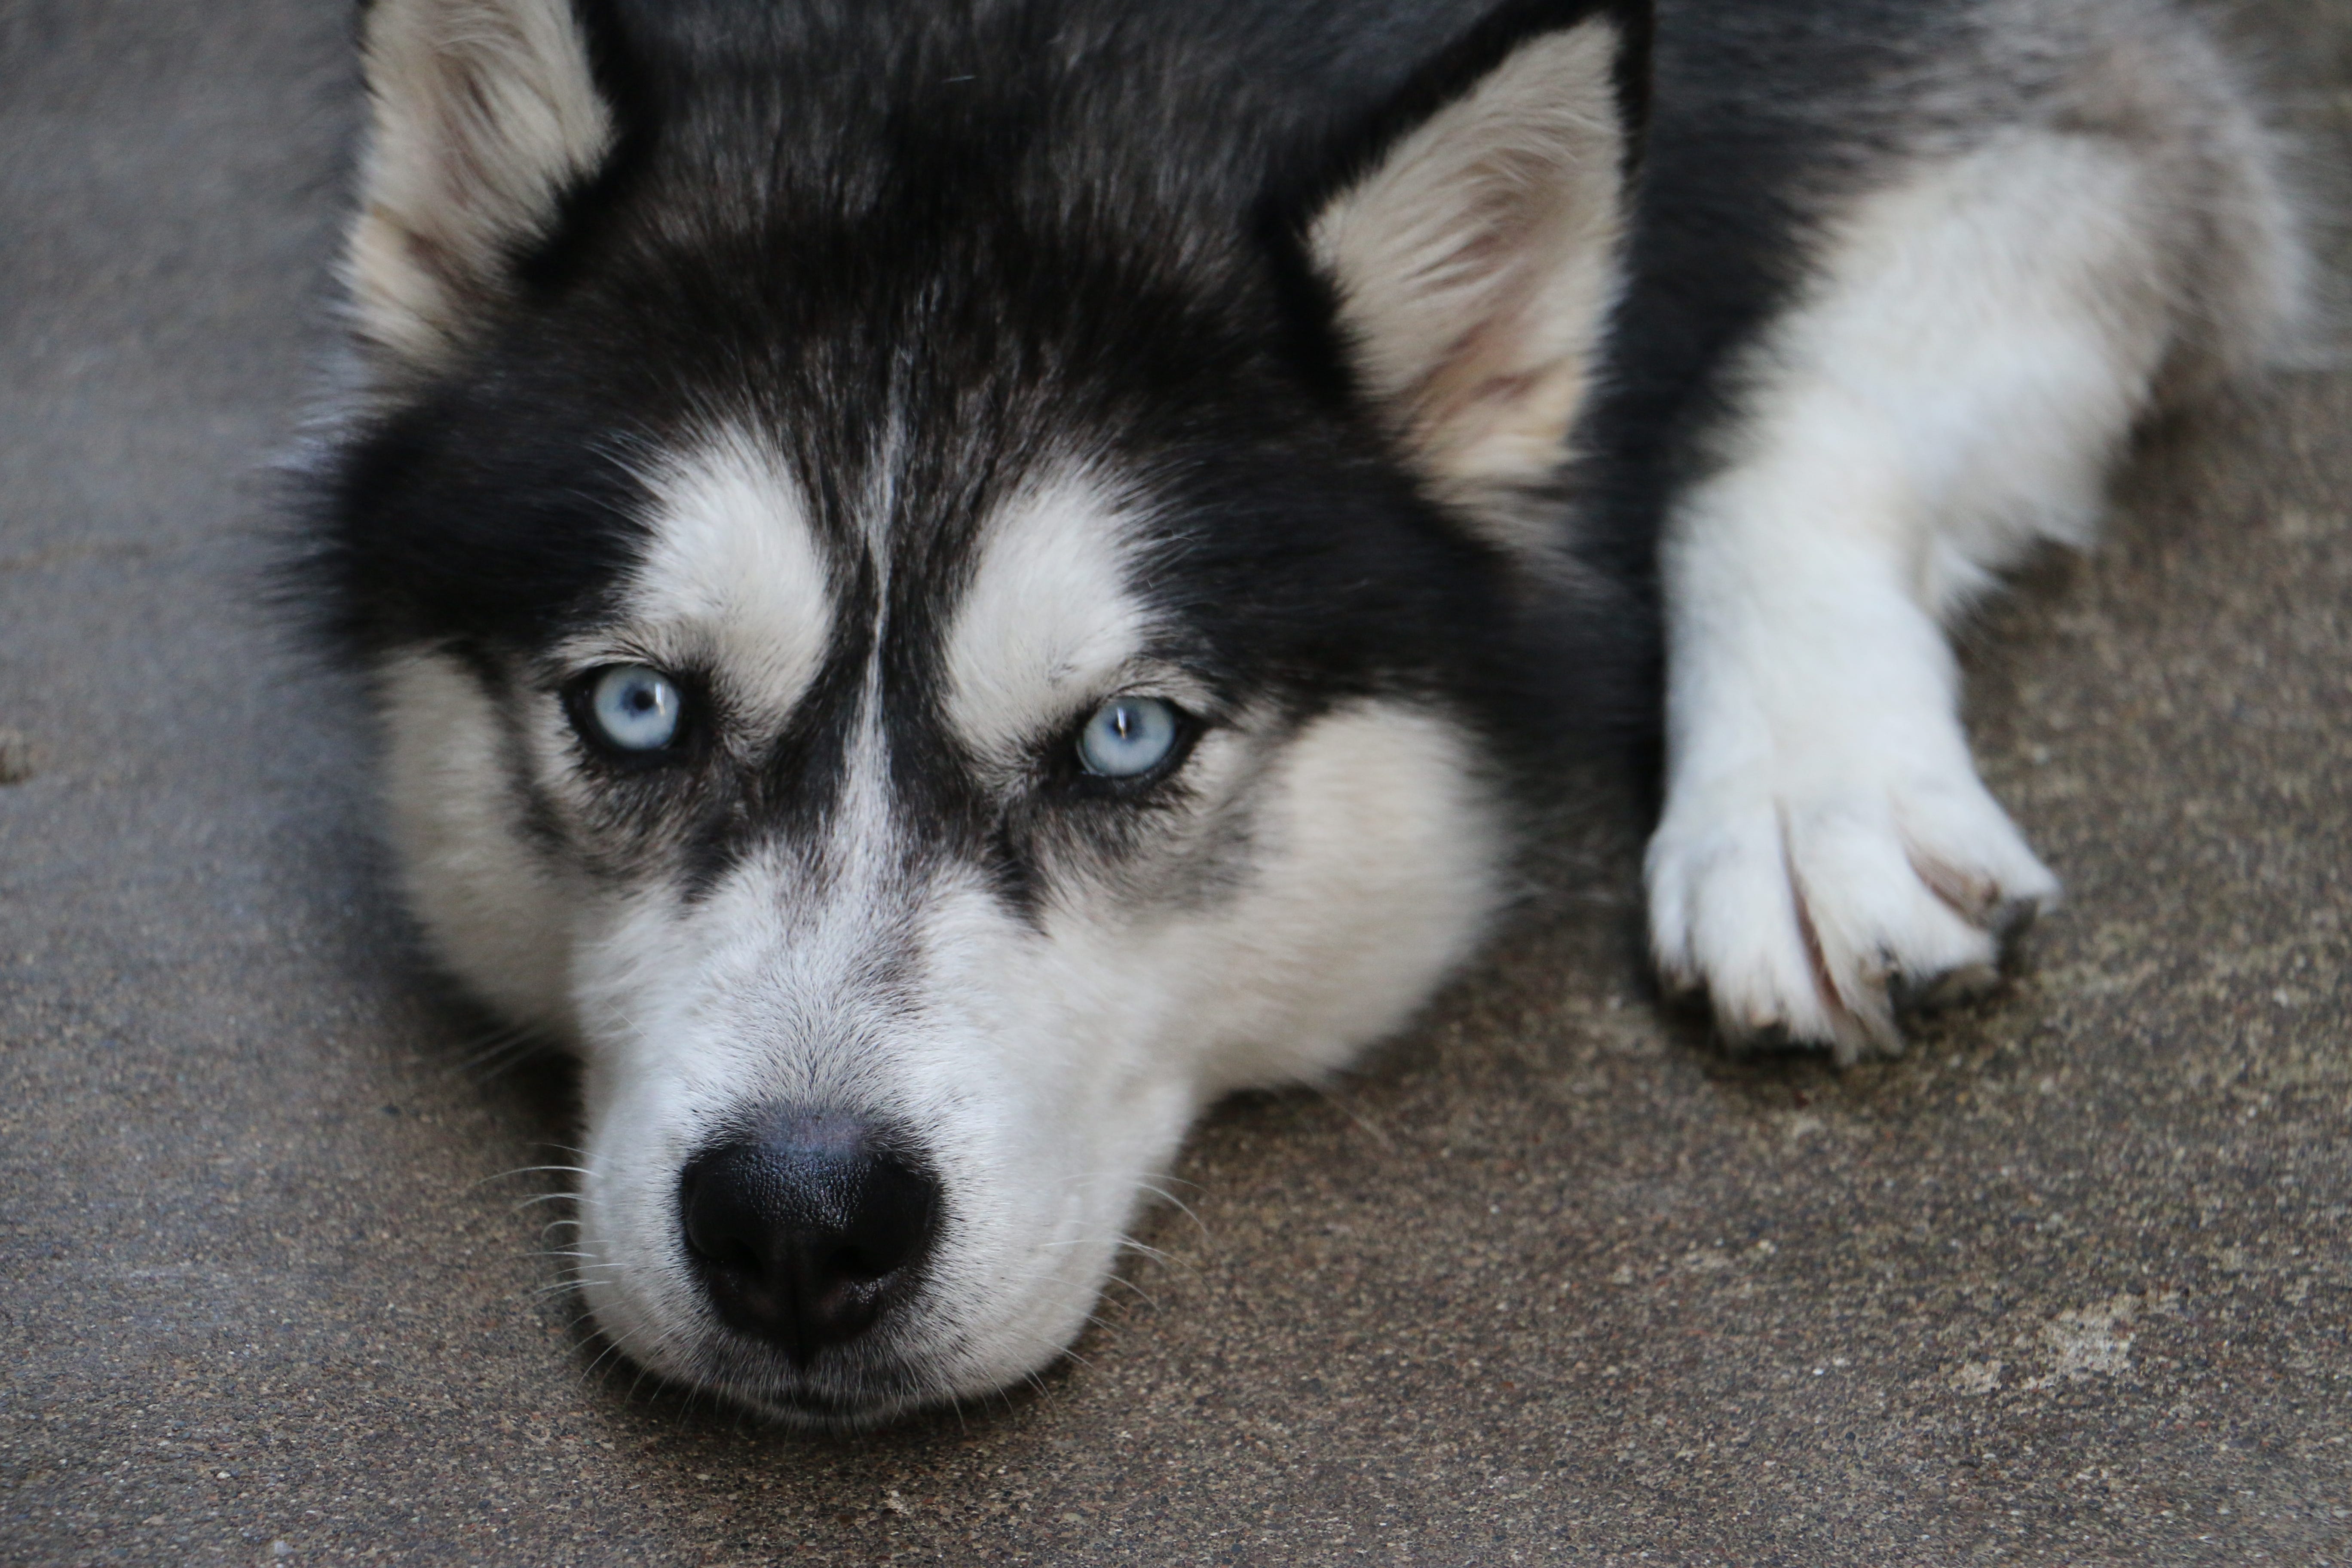 wolf hybrid puppies for sale craigslist